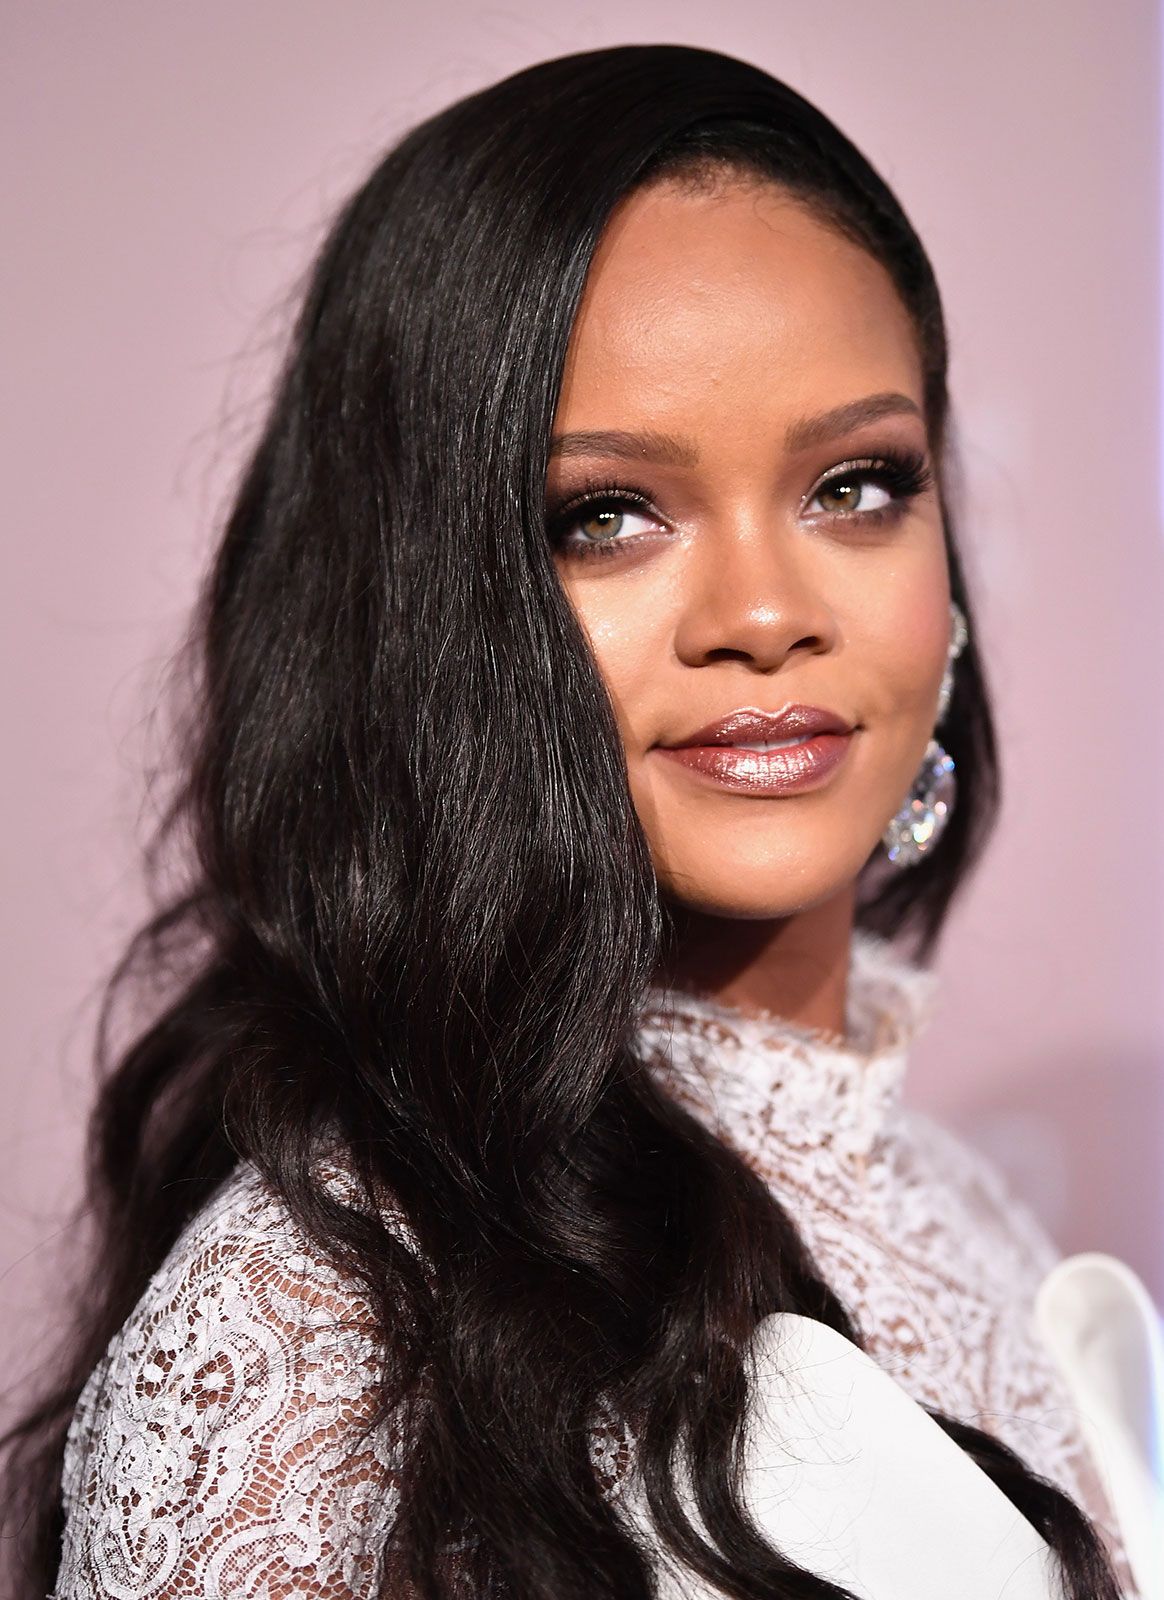 Rihanna teases fans with new album